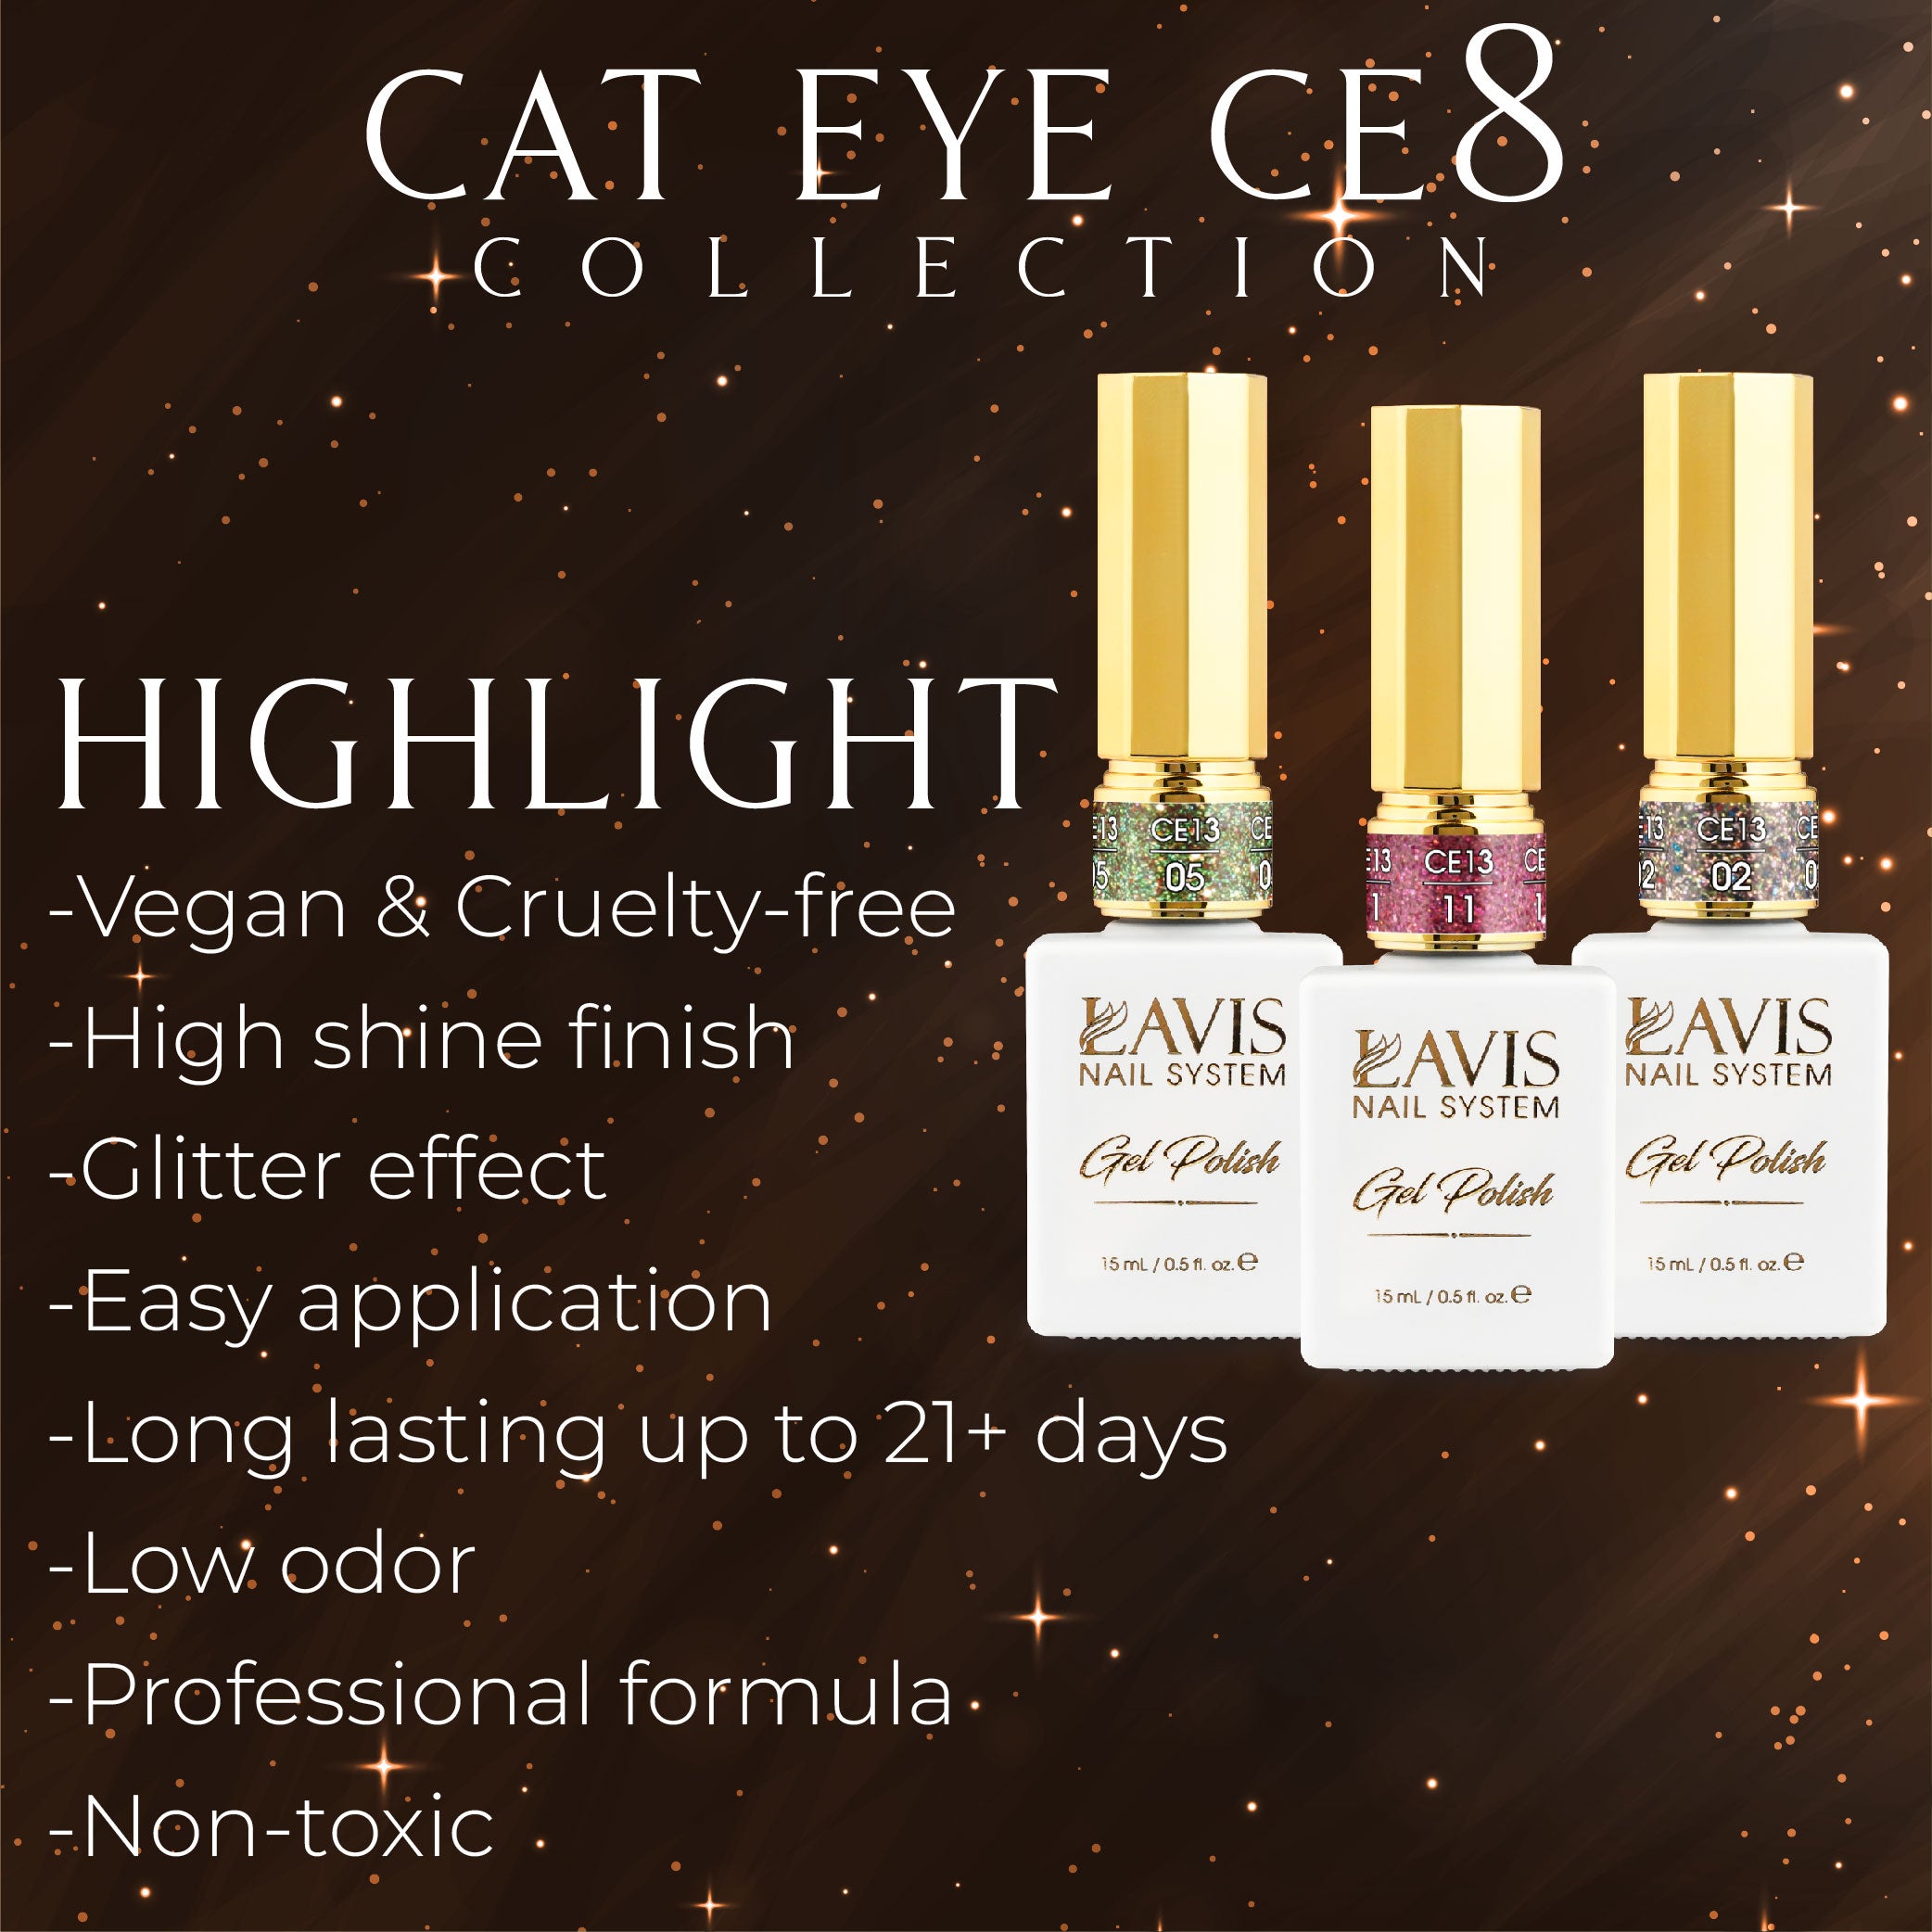 LAVIS Cat Eyes CE8 - 12 - Gel Polish 0.5 oz - Lavis Hidden Treasures Collection